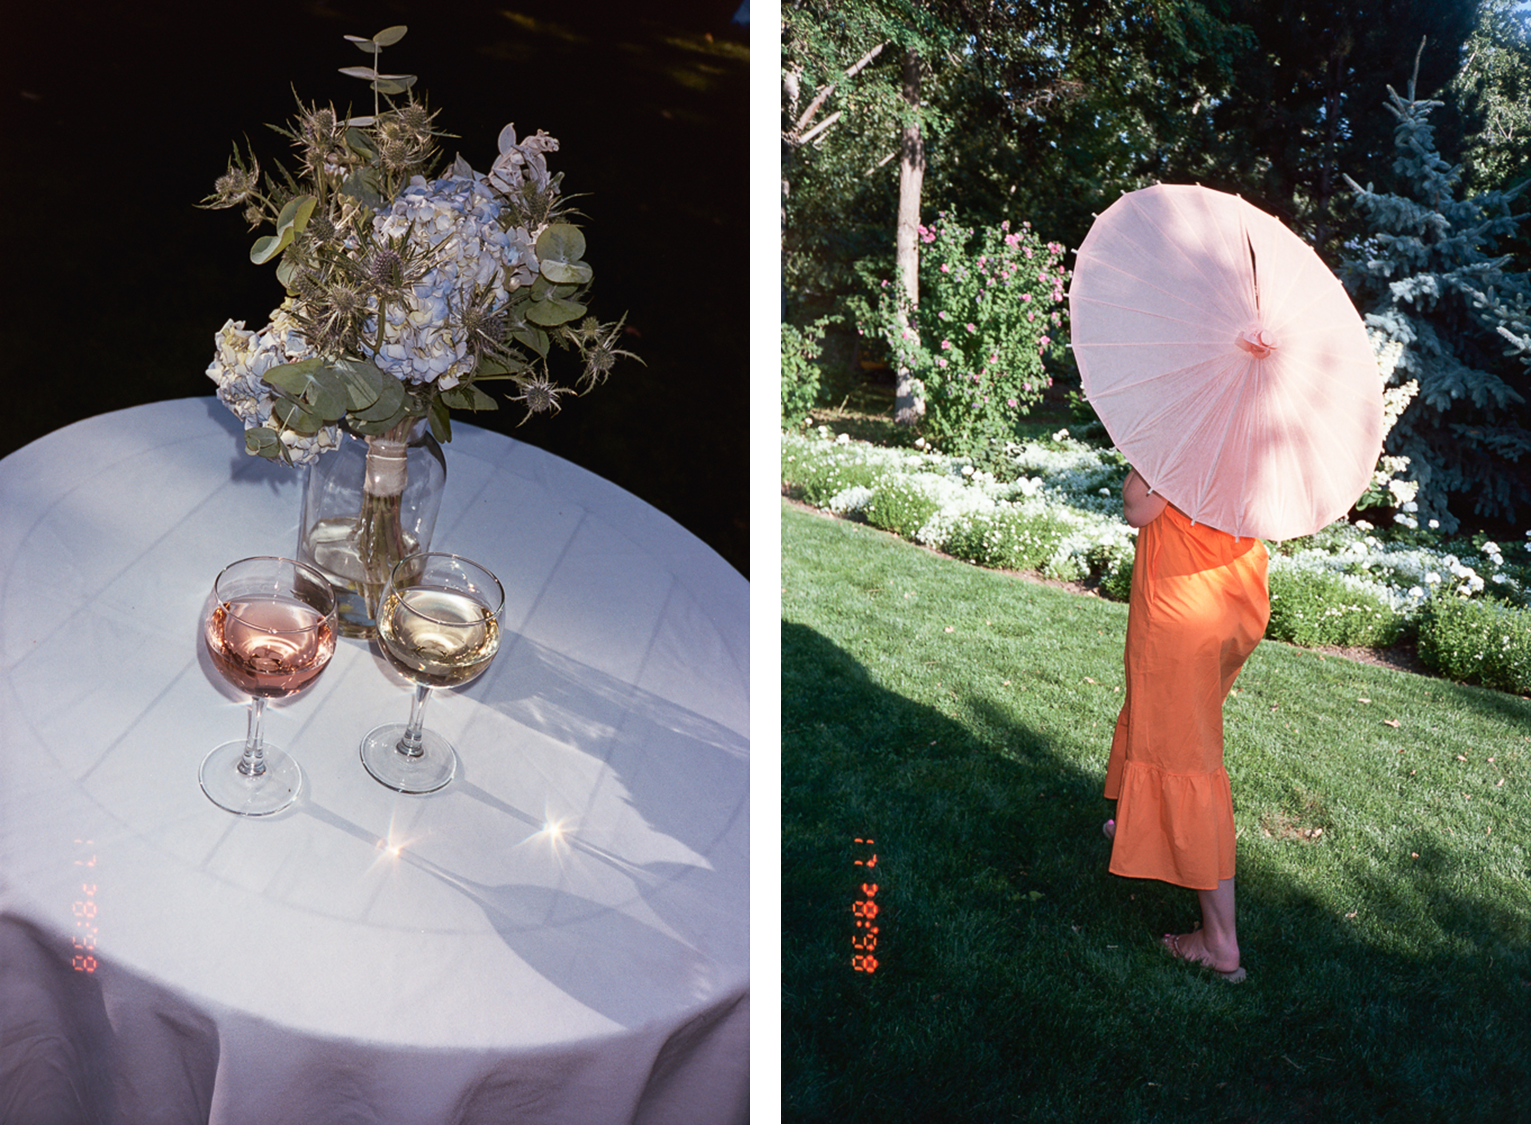 Linden-Gardens-Wedding-Venue-Okanagan-Penticton-Photography-Film-Analog-37.PNG